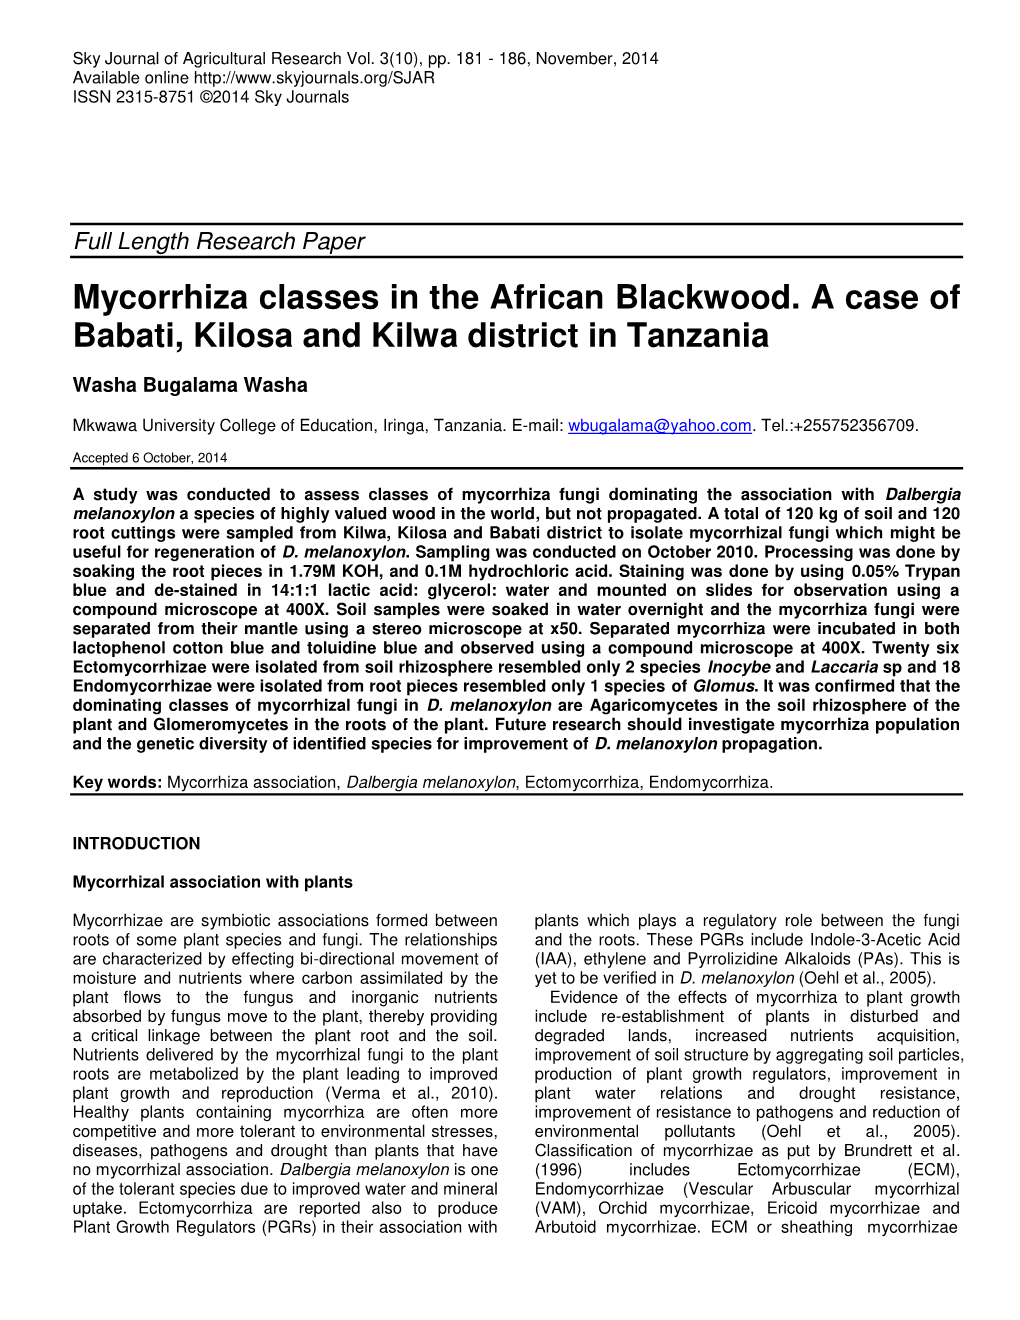 Mycorrhiza Classes in the African Blackwood. a Case of Babati, Kilosa and Kilwa District in Tanzania